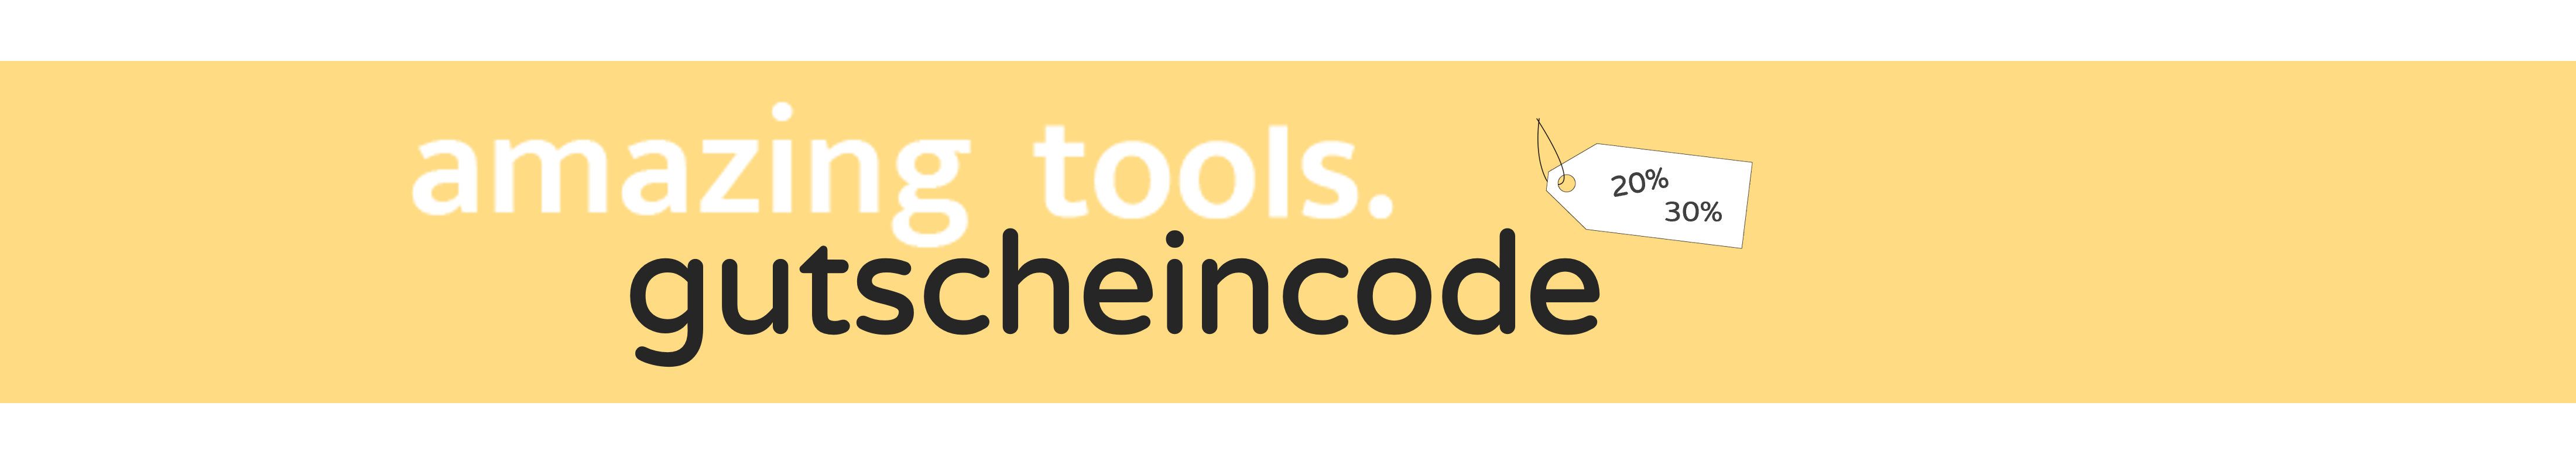 amazing tools gutscheincode